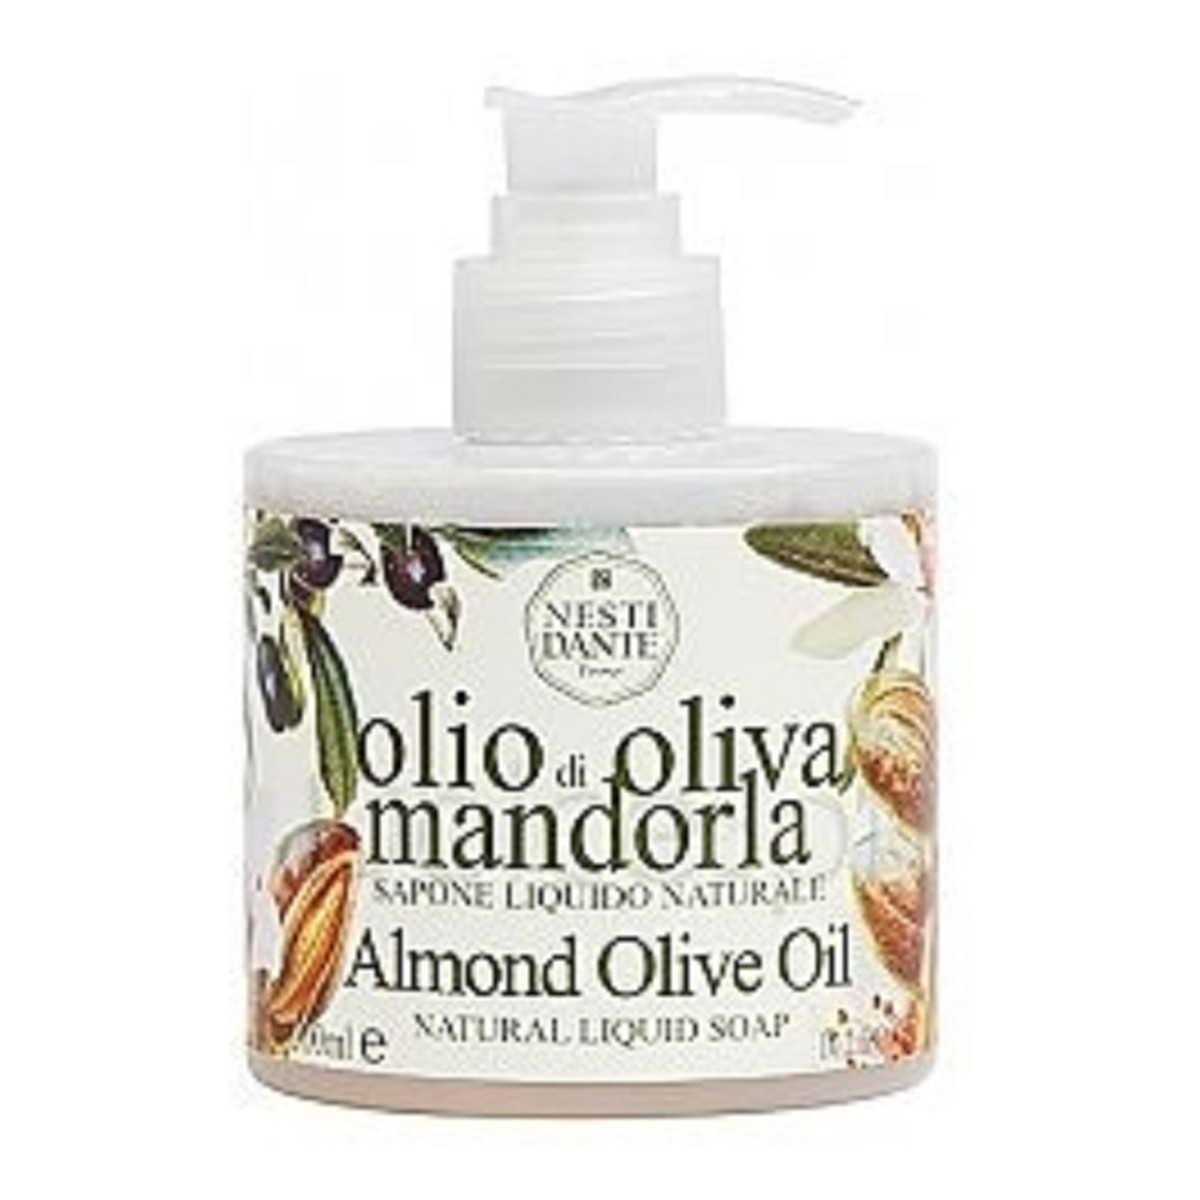 Nesti Dante Olio Di Oliva Mandorla Almond Olive Oil Natural Liquid Soap Mydło w płynie 300ml